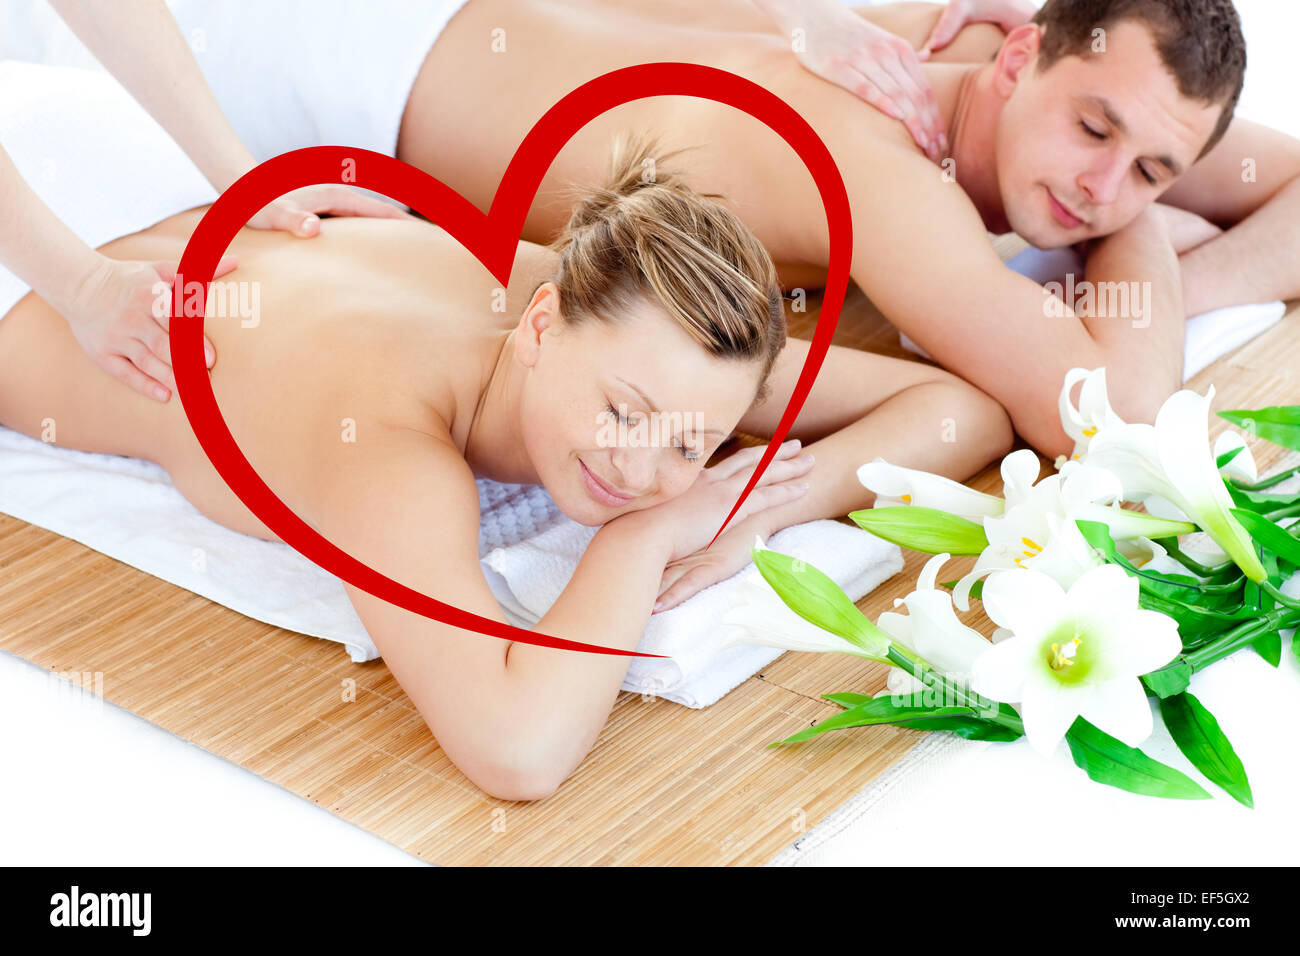 Composite image of loving young couple enjoying a back massage Stock Photo